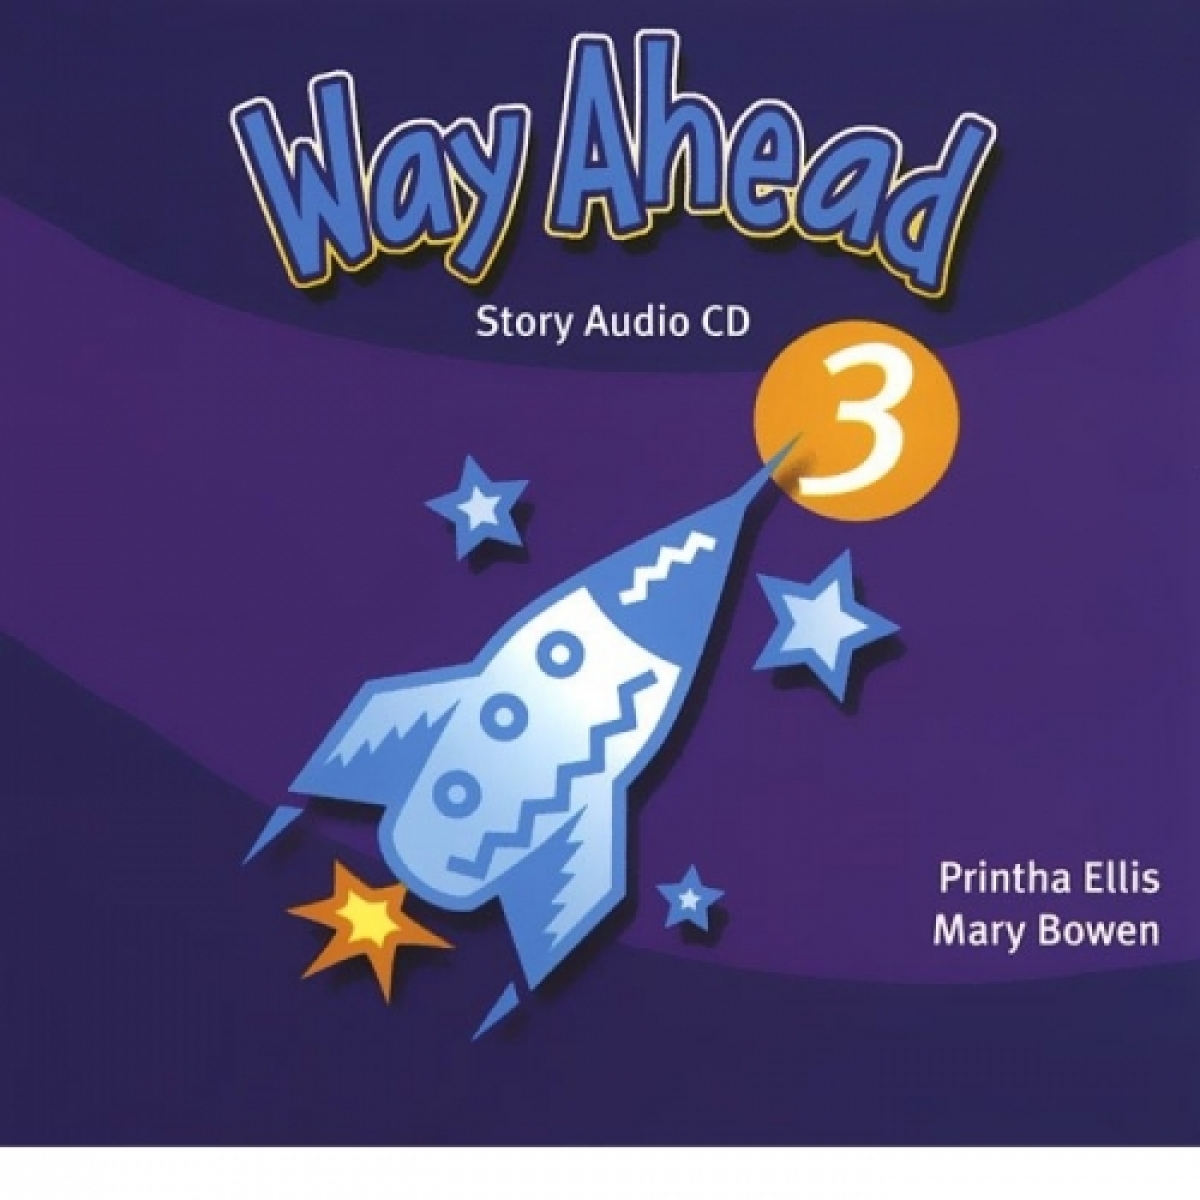 Way Ahead 3 Story. Audio CD 